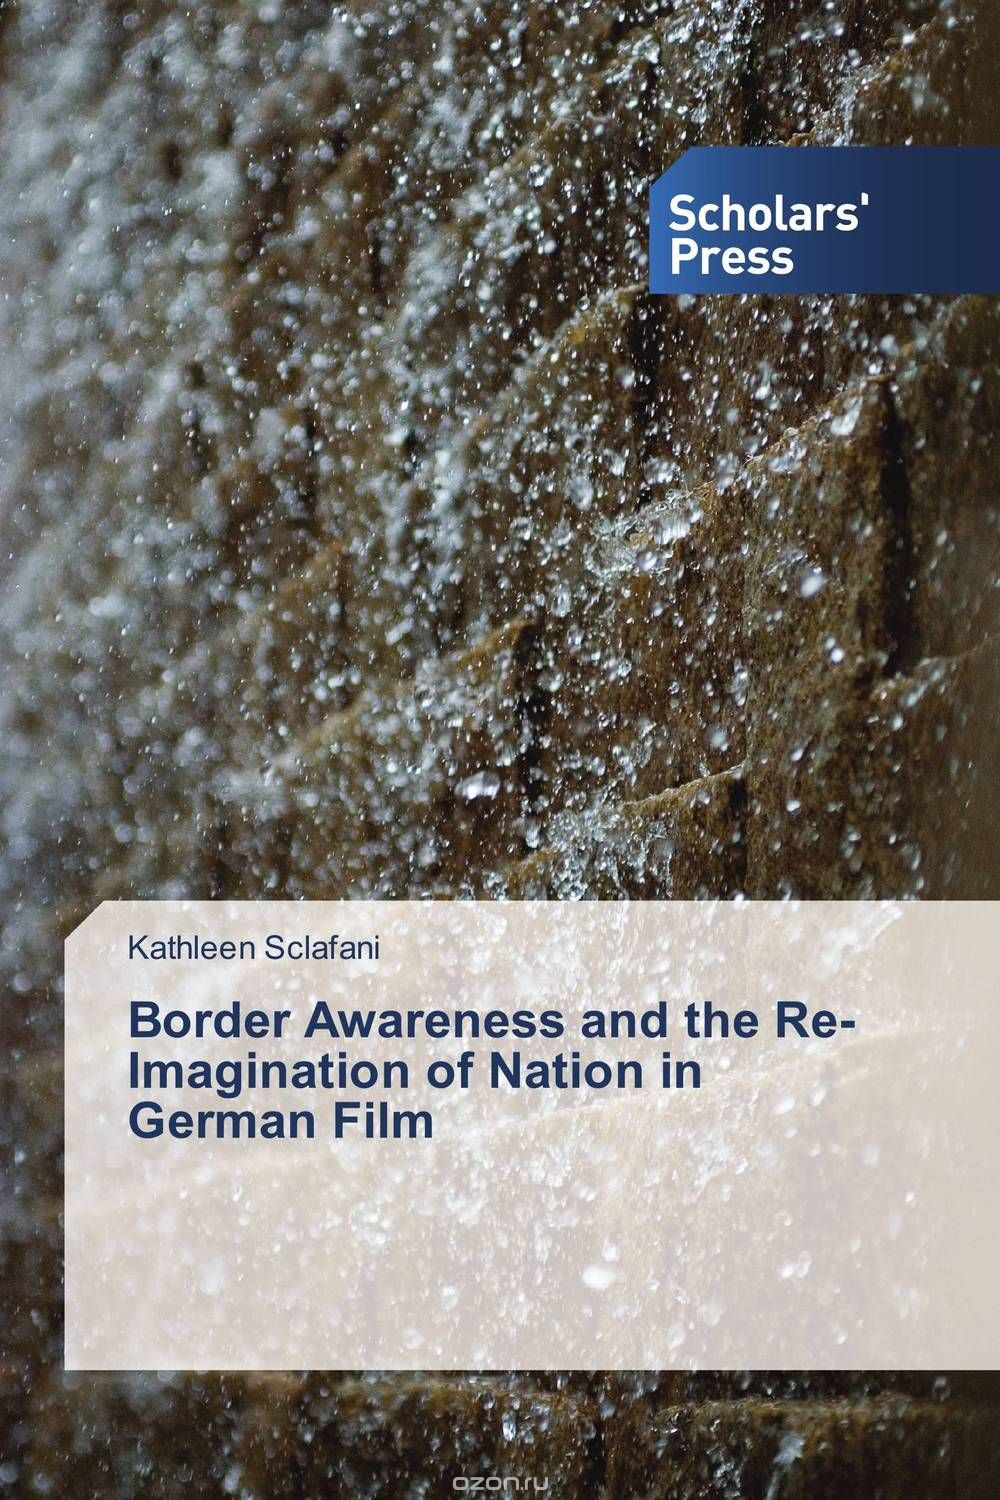 Скачать книгу "Border Awareness and the Re-Imagination of Nation in German Film"